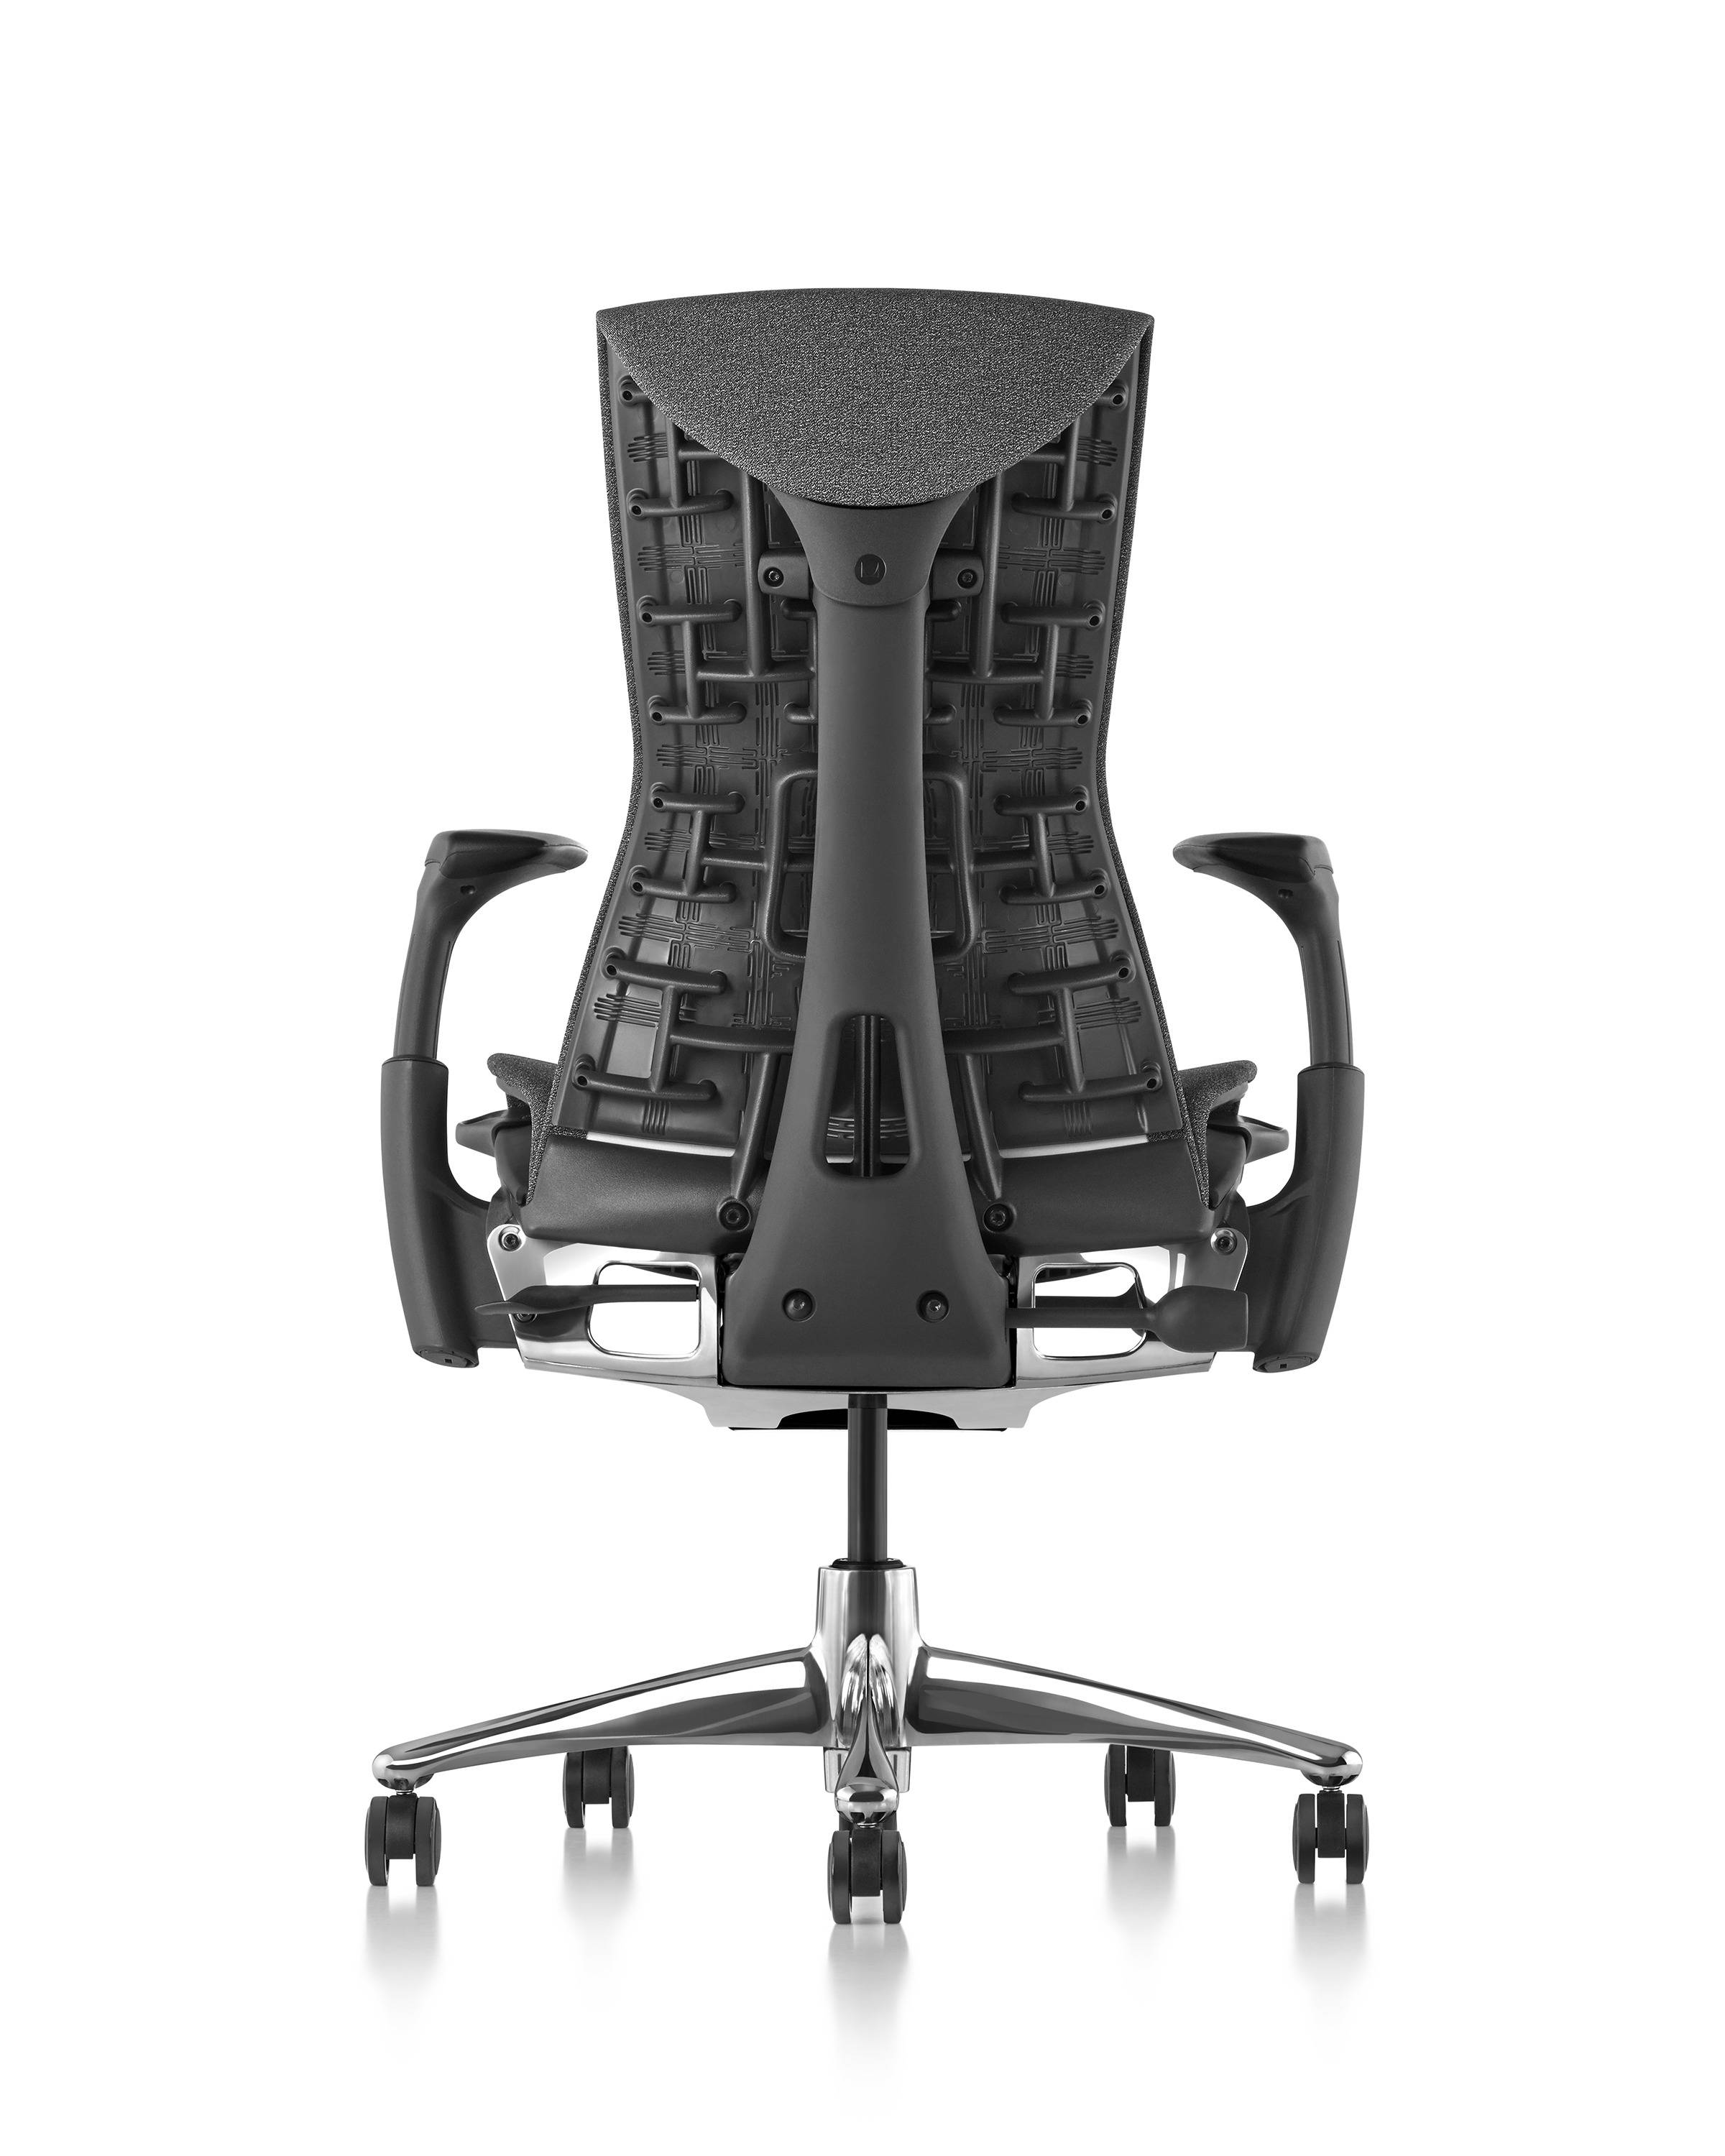 Herman Miller赫曼米勒的几款“人体工学椅”各有什么功能特点？搜狐大视野搜狐新闻